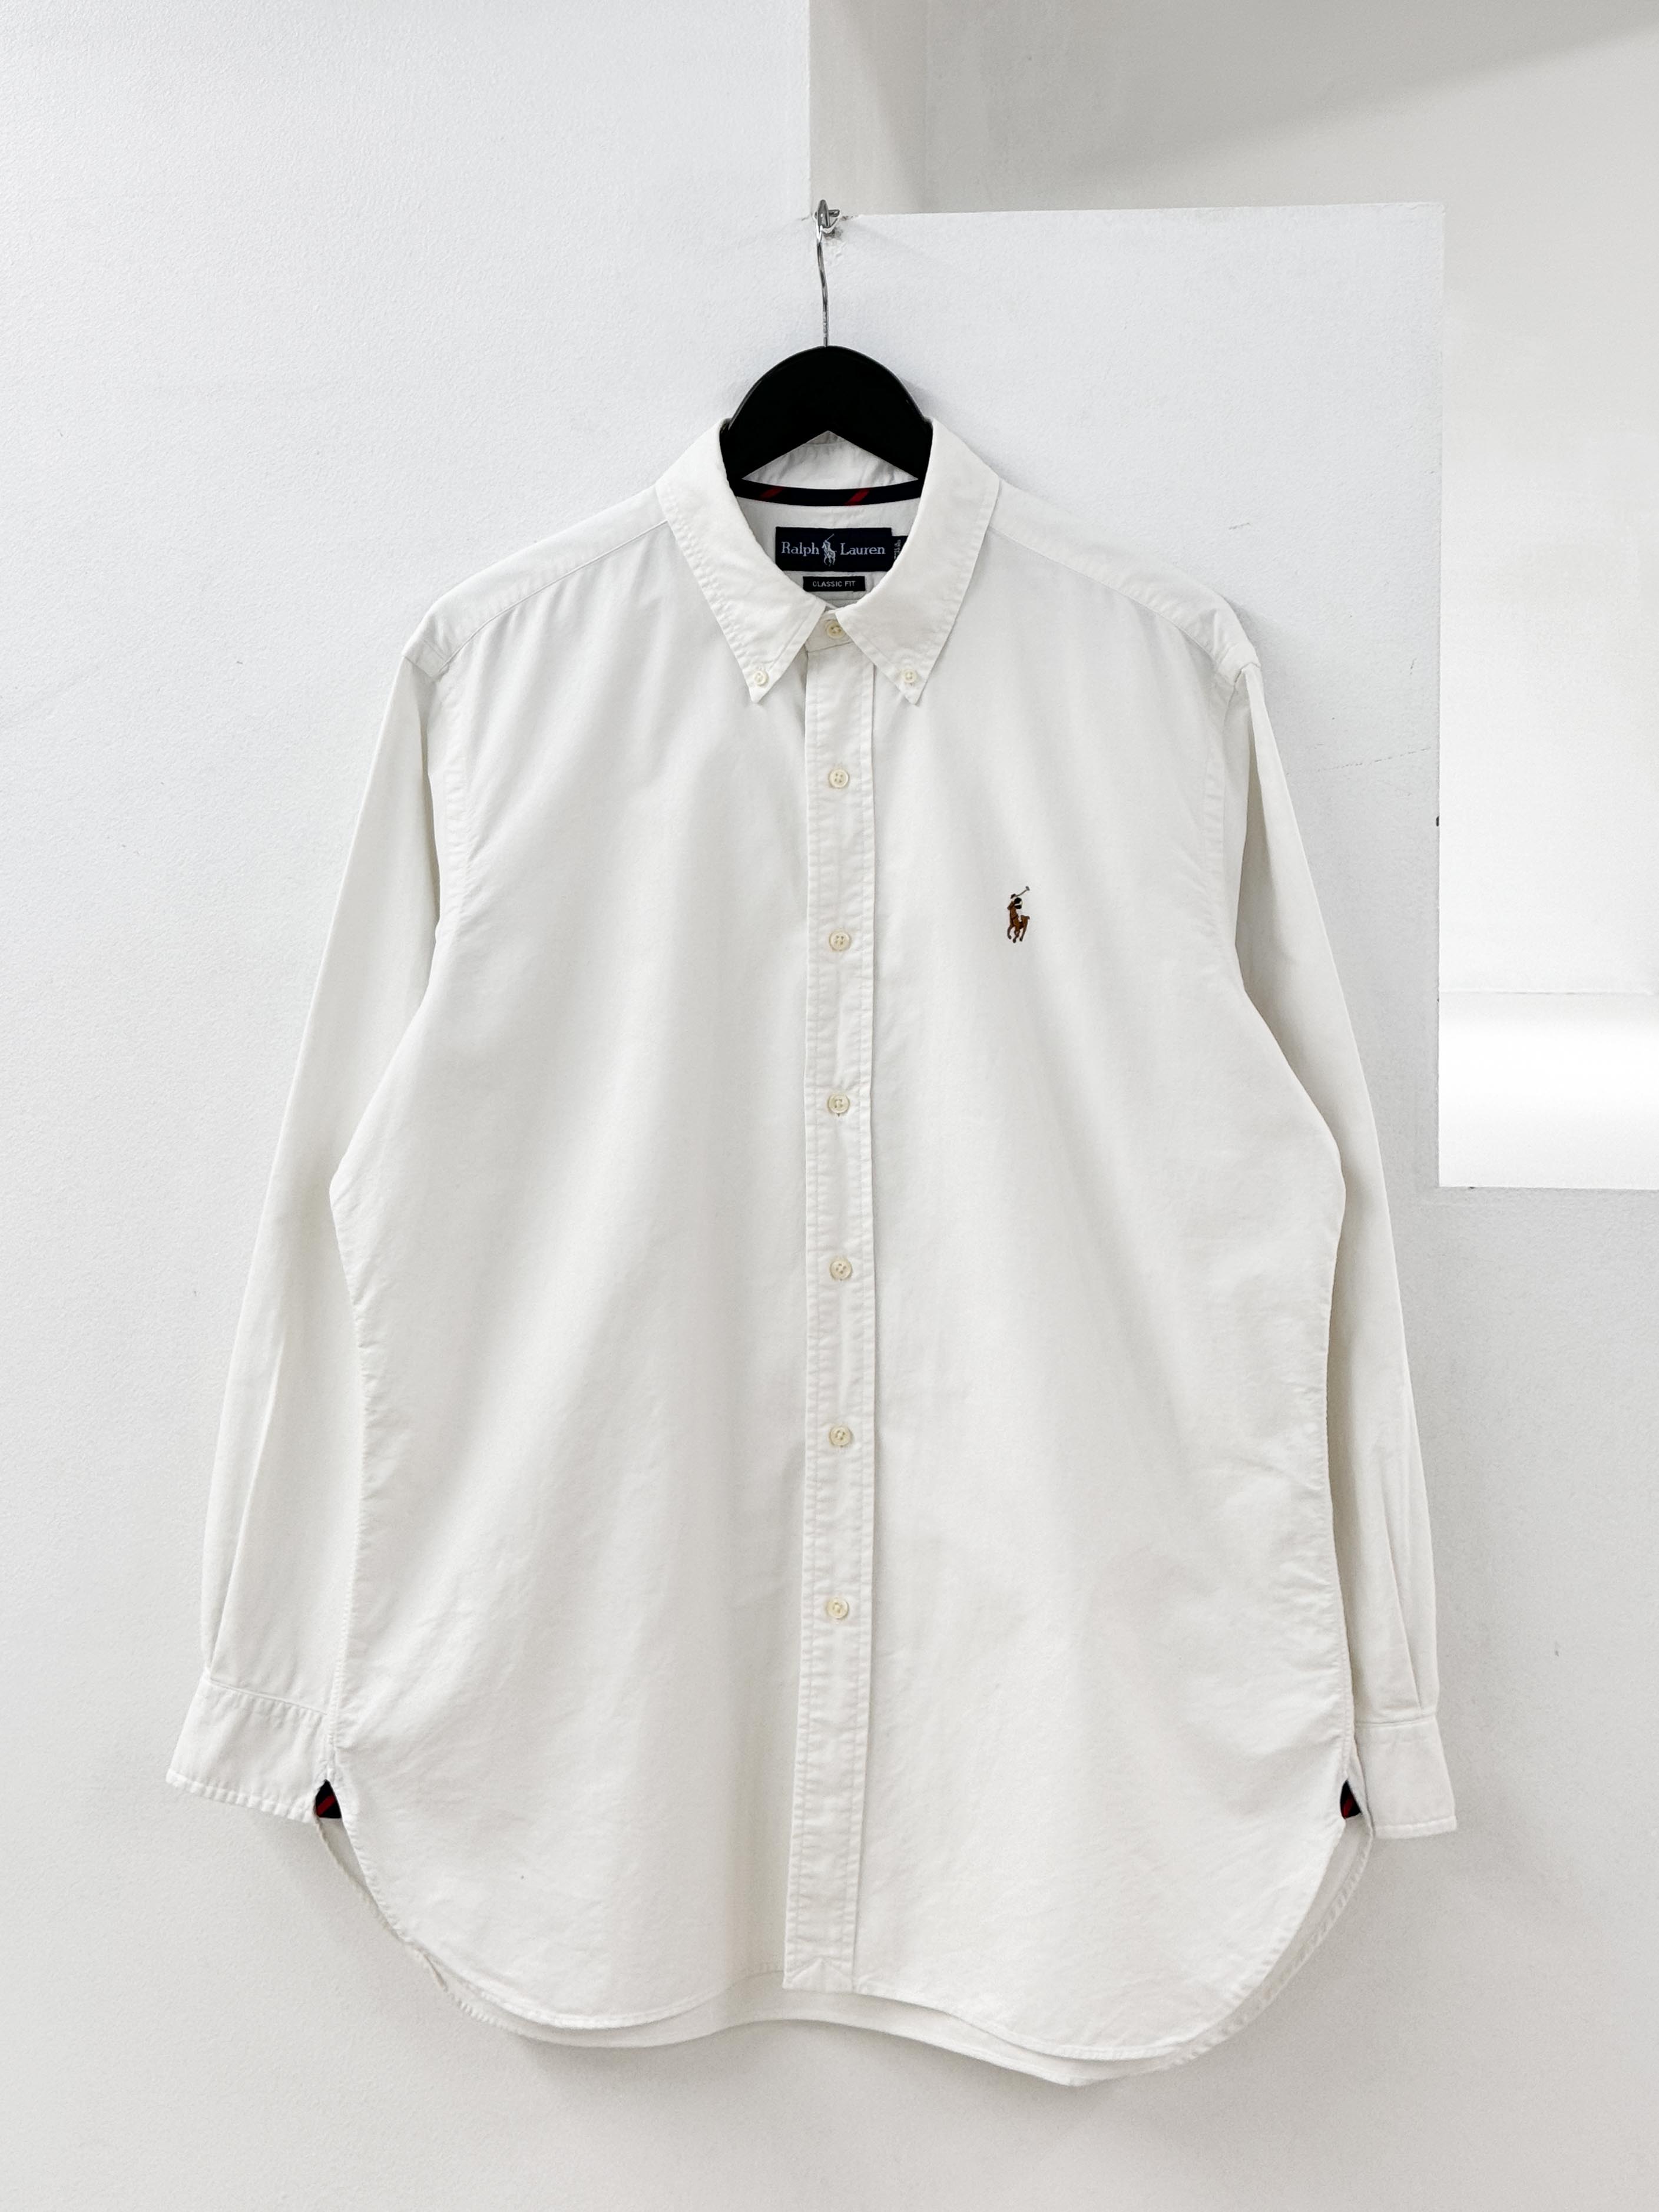 RalphLauren white oxford shirts